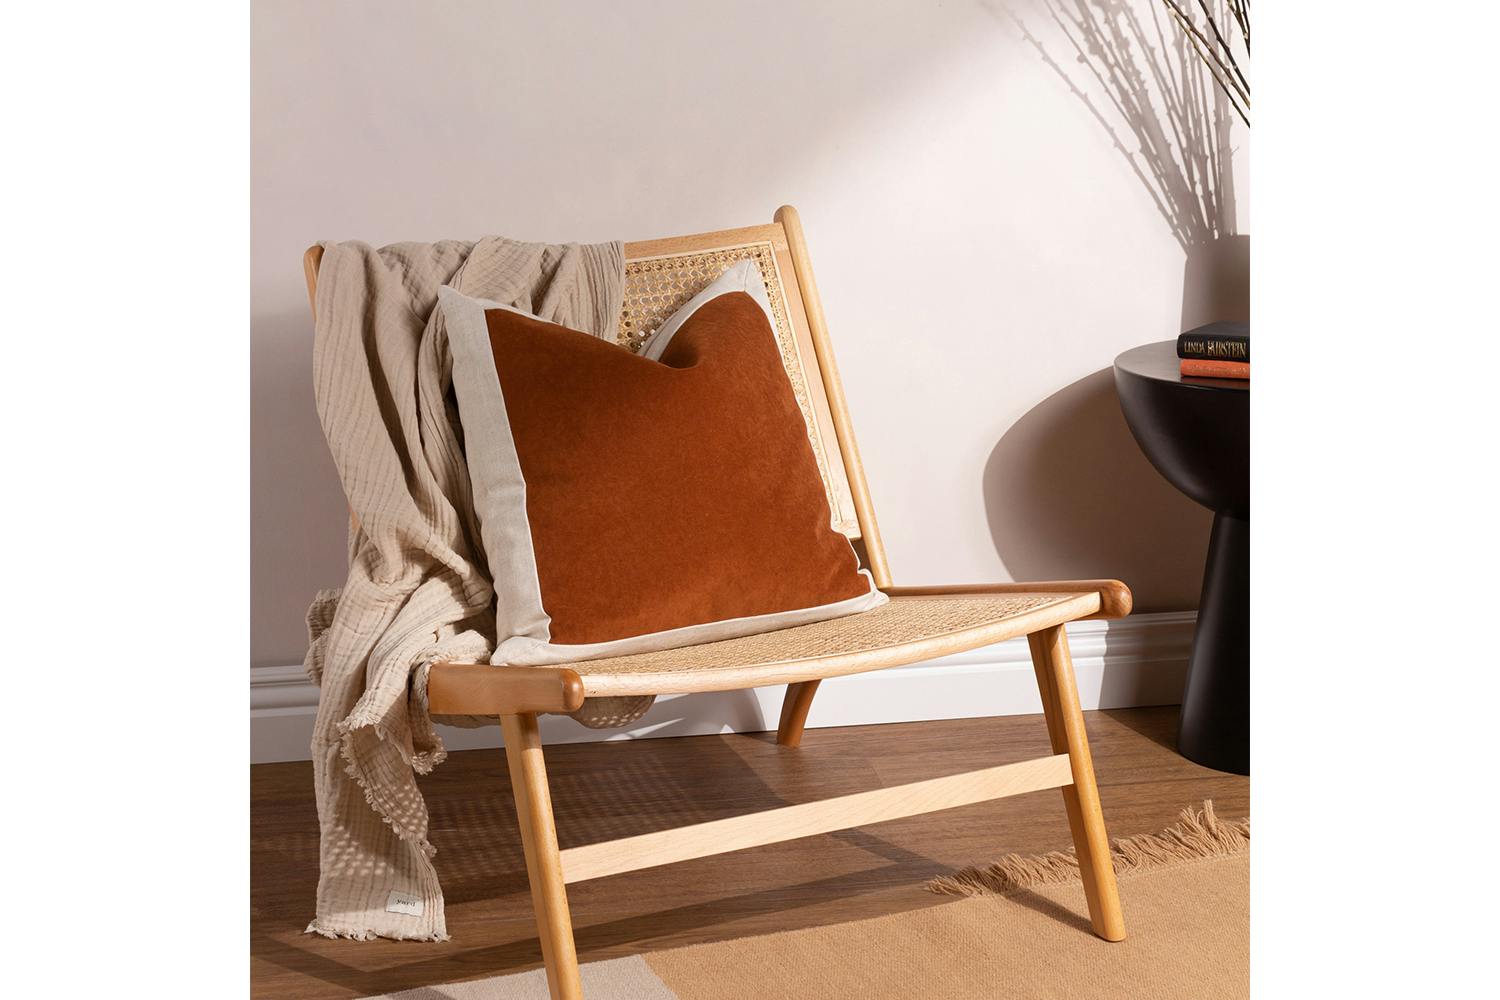 Auden Polyester Cushion | Pecan | 50 x 50 cm